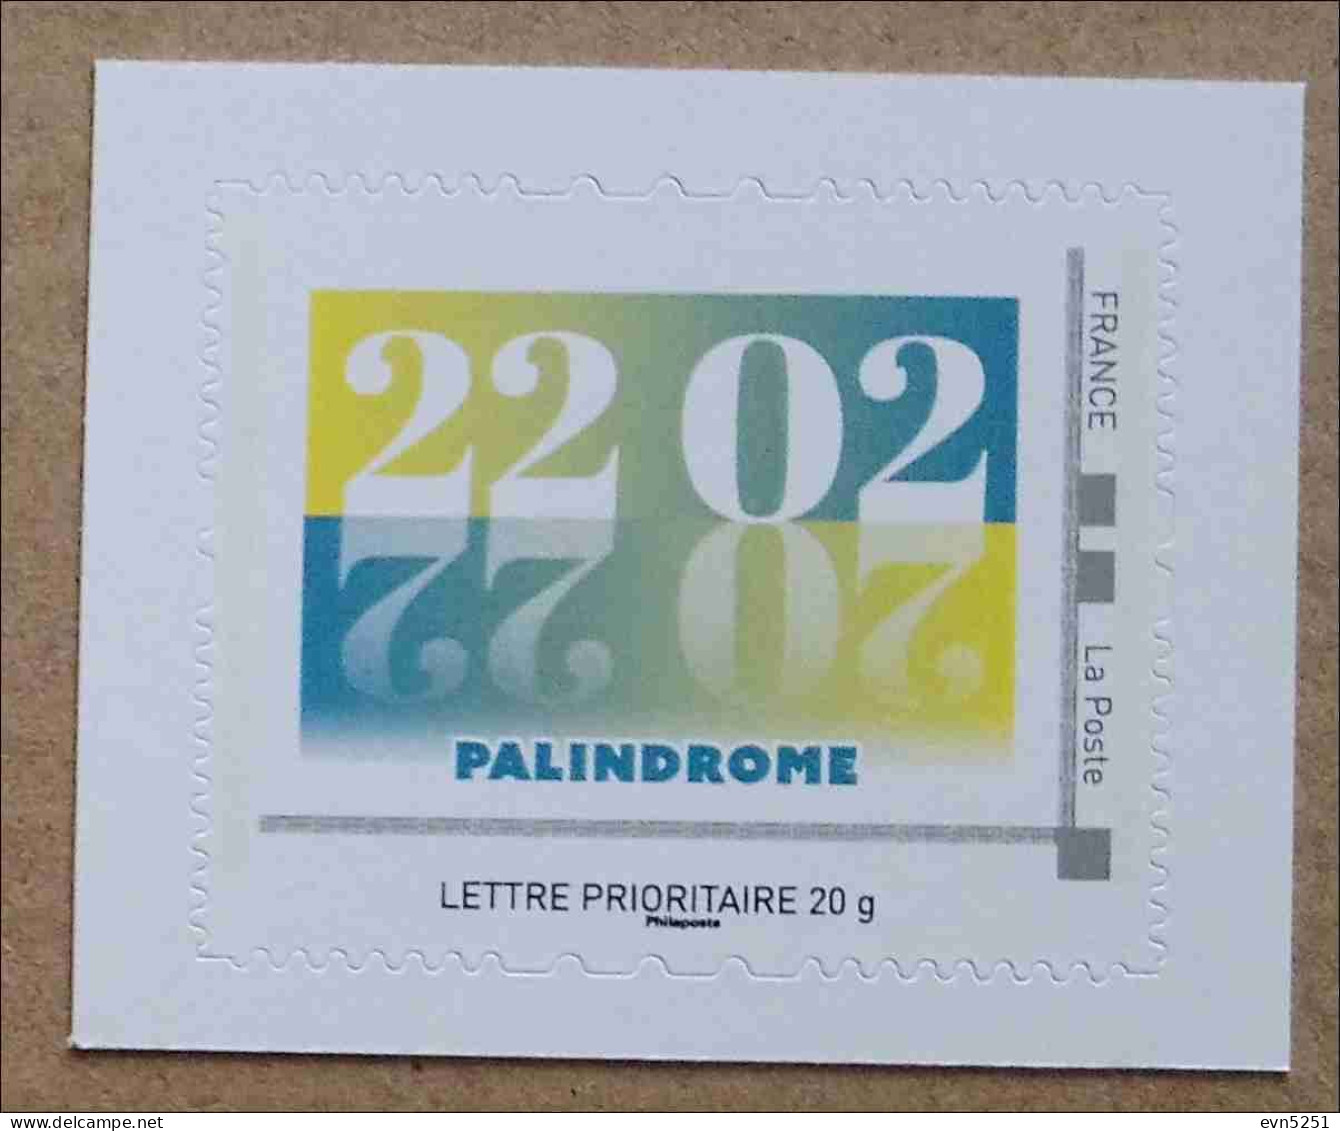 A4-88 : Palindrome - 22 02 2022 (autoadhésif / Autocollant) - Unused Stamps